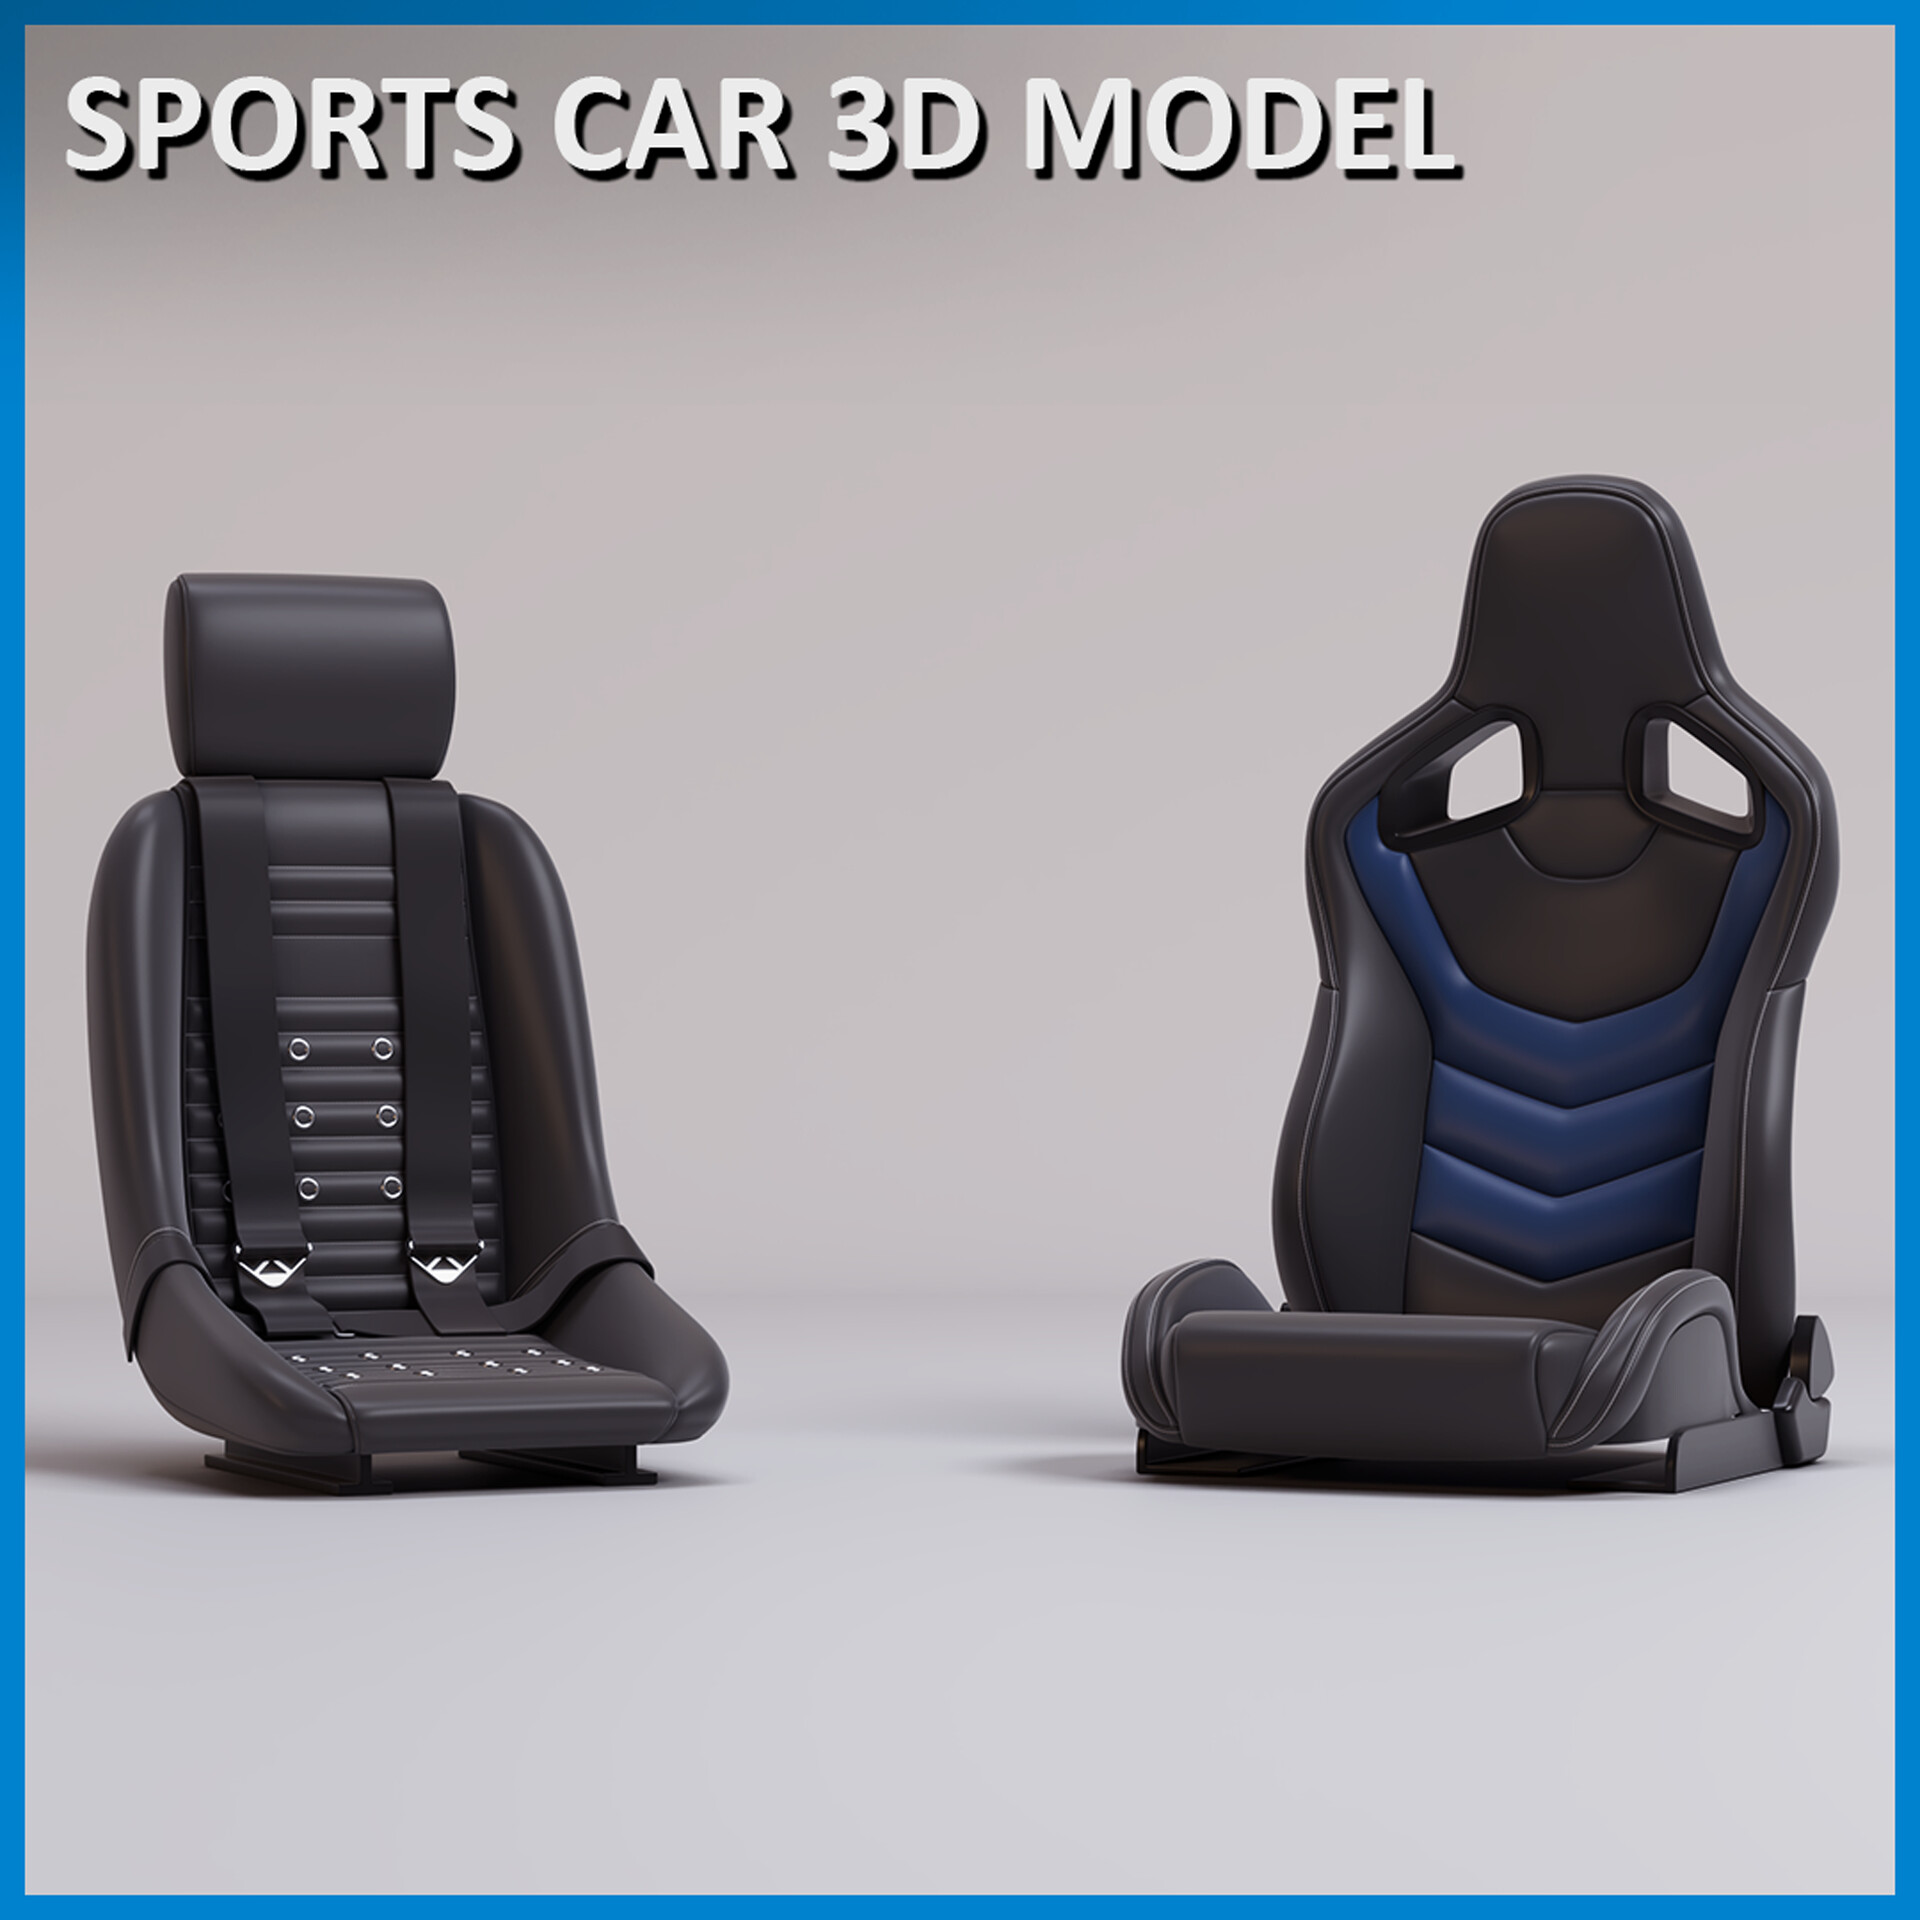 Sports Car Seat 3D Model